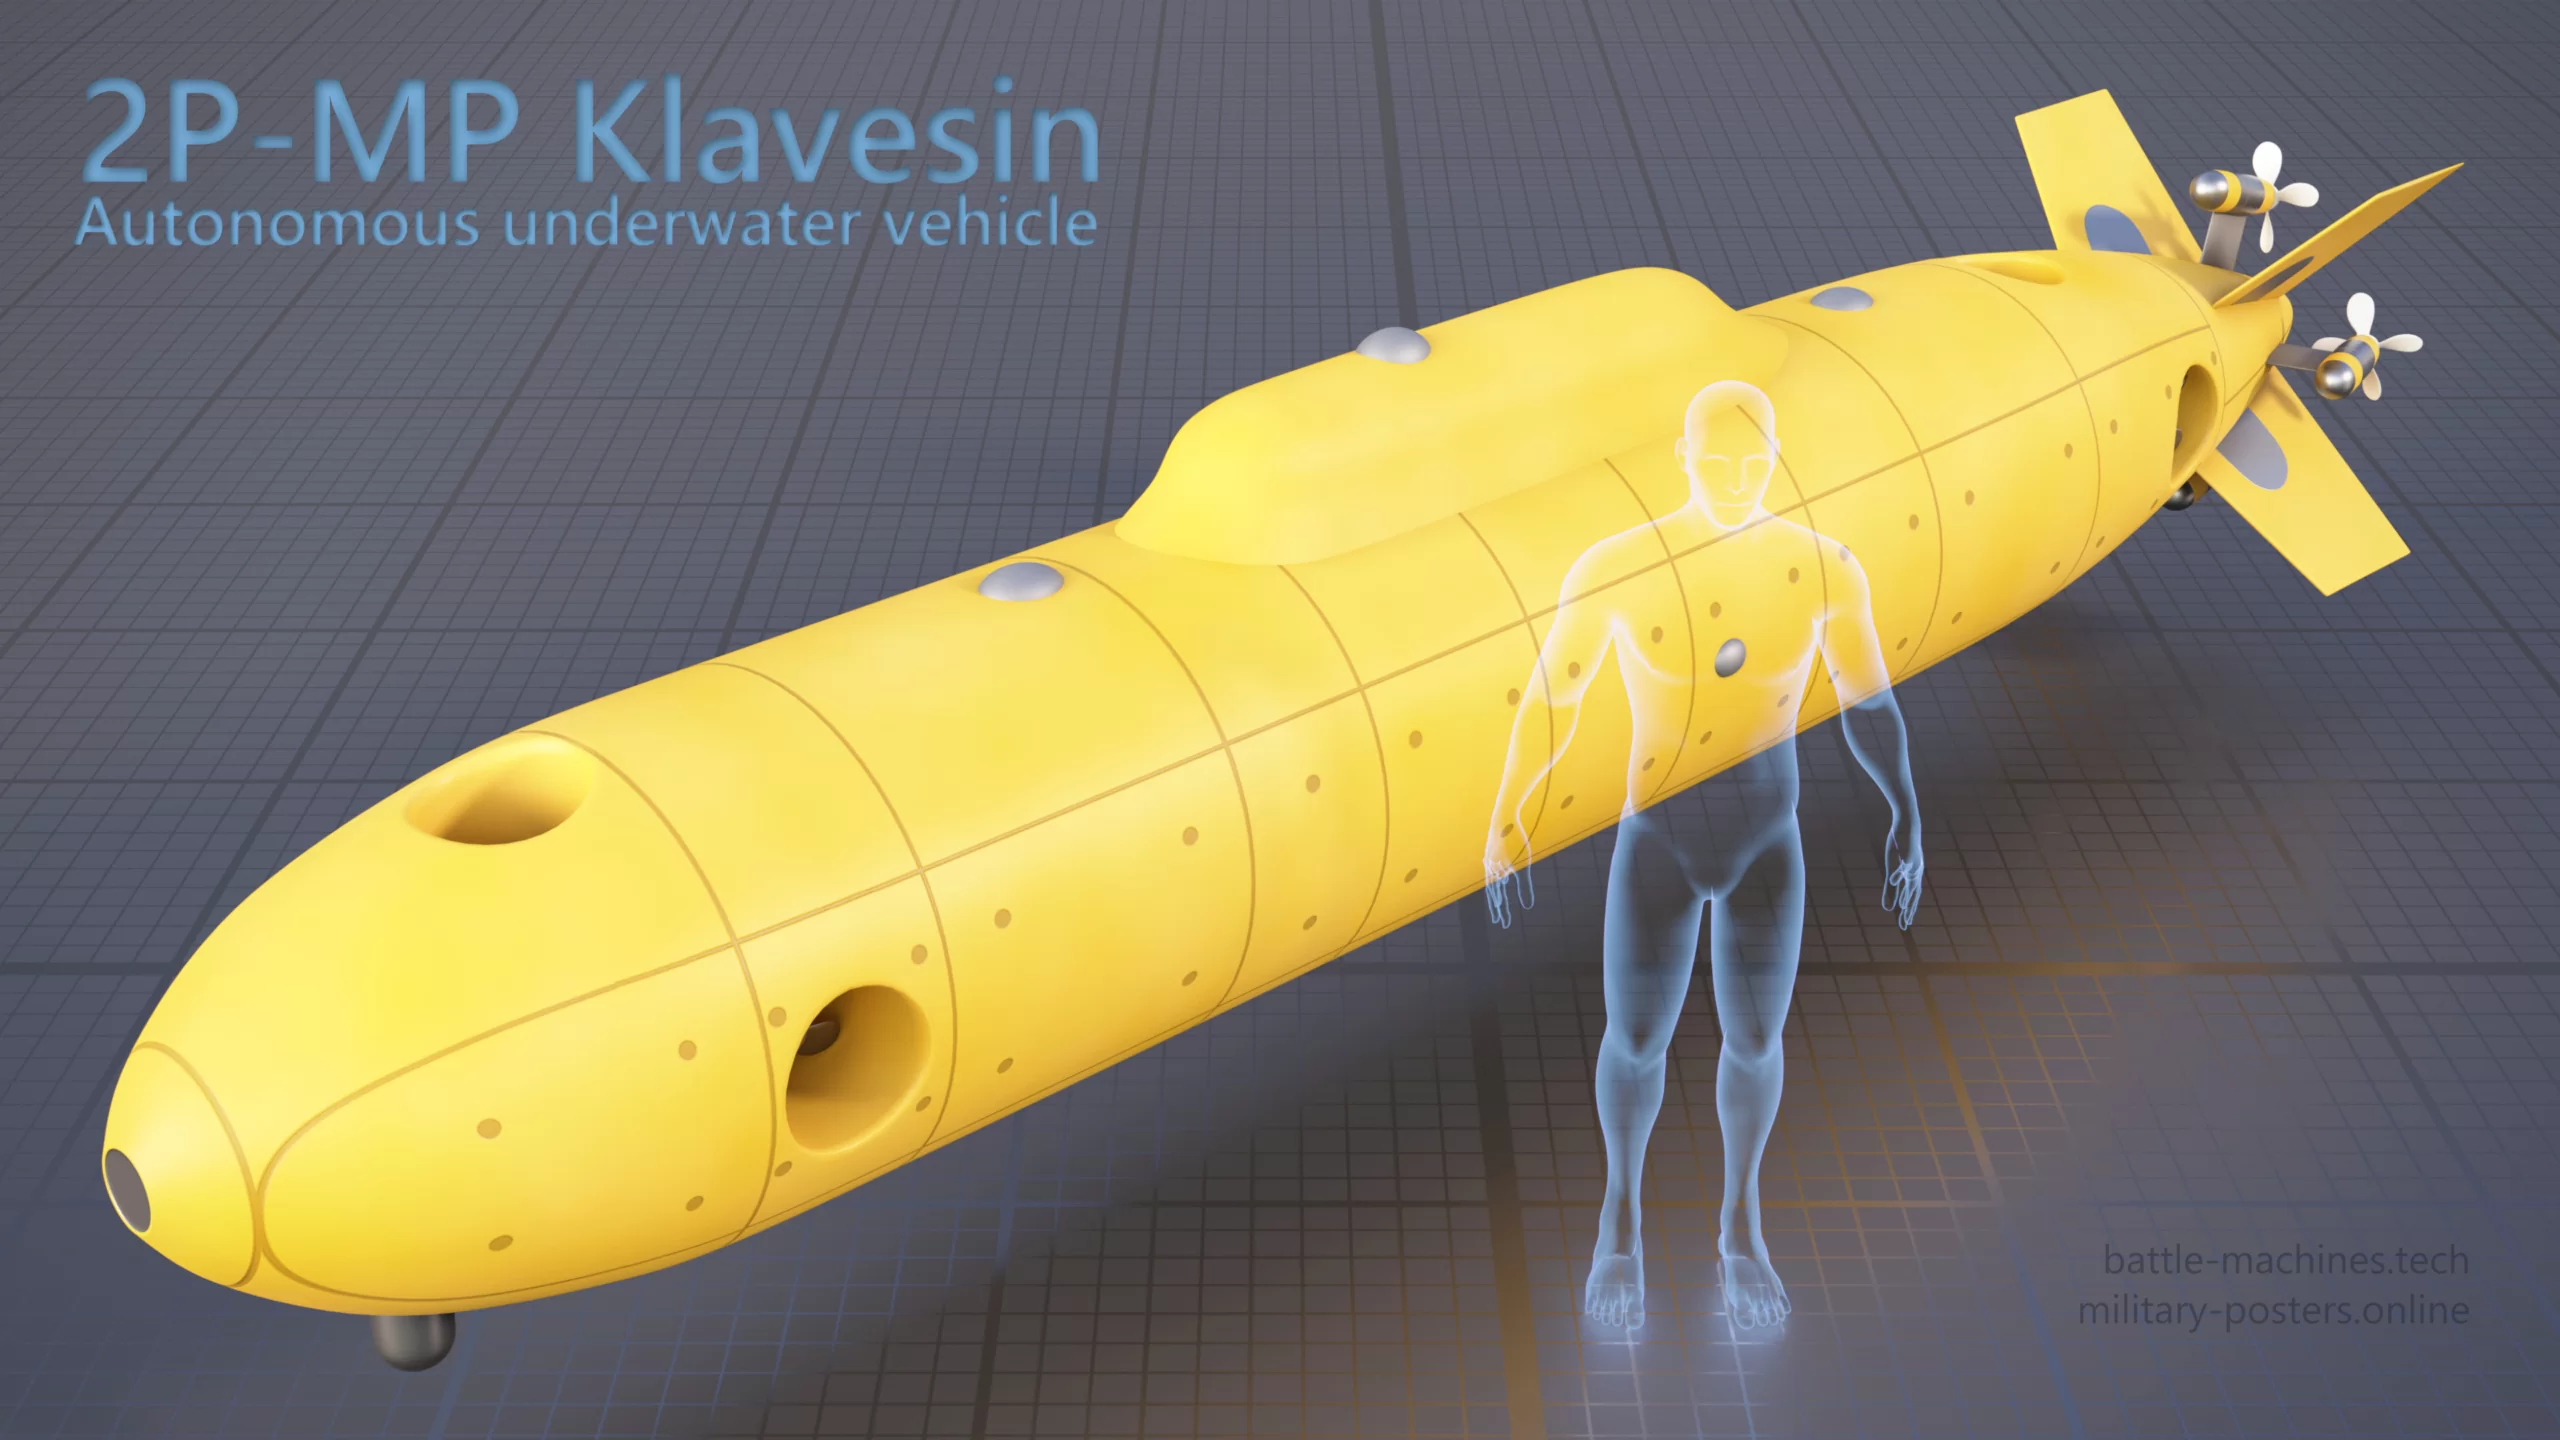 2P-MP Klavesin - autonomous underwater vehicle